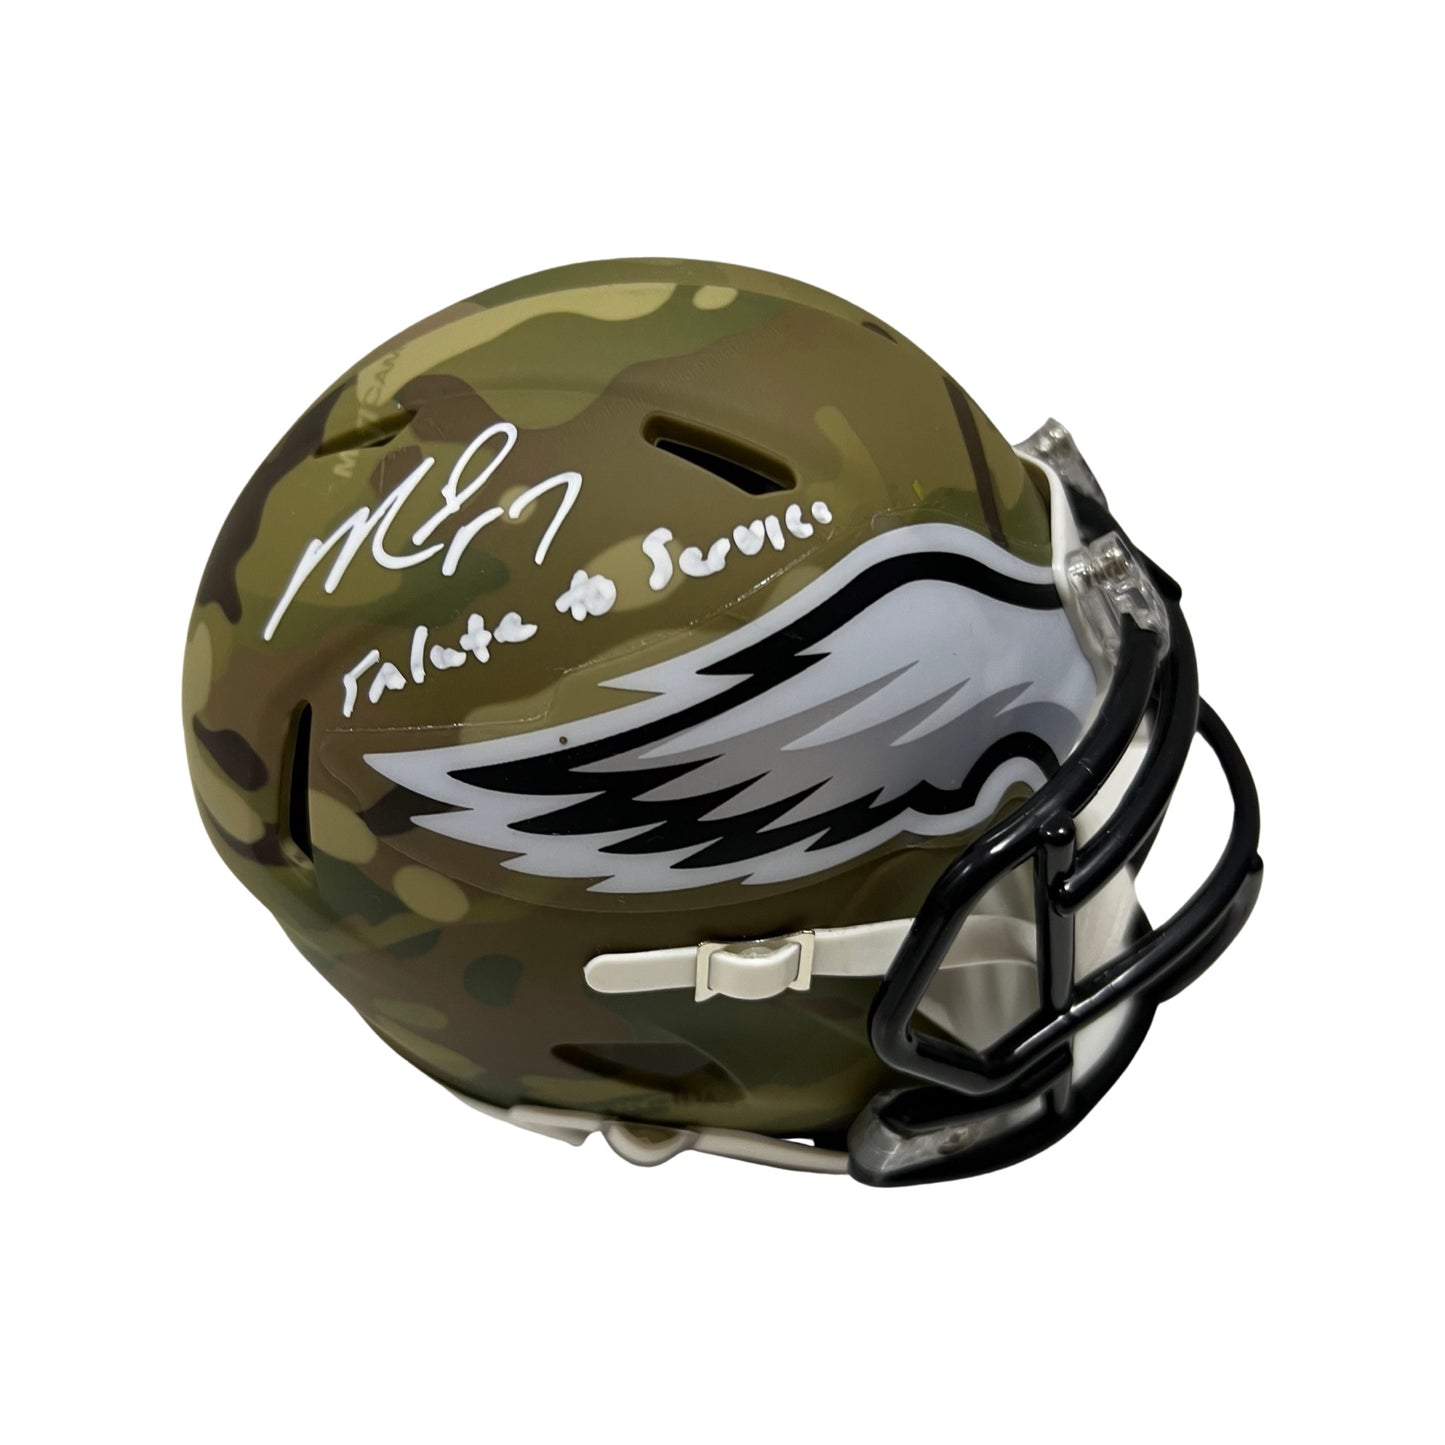 Michael Vick Autographed Philadelphia Eagles Camo Mini Helmet “Salute to Service” Inscription JSA